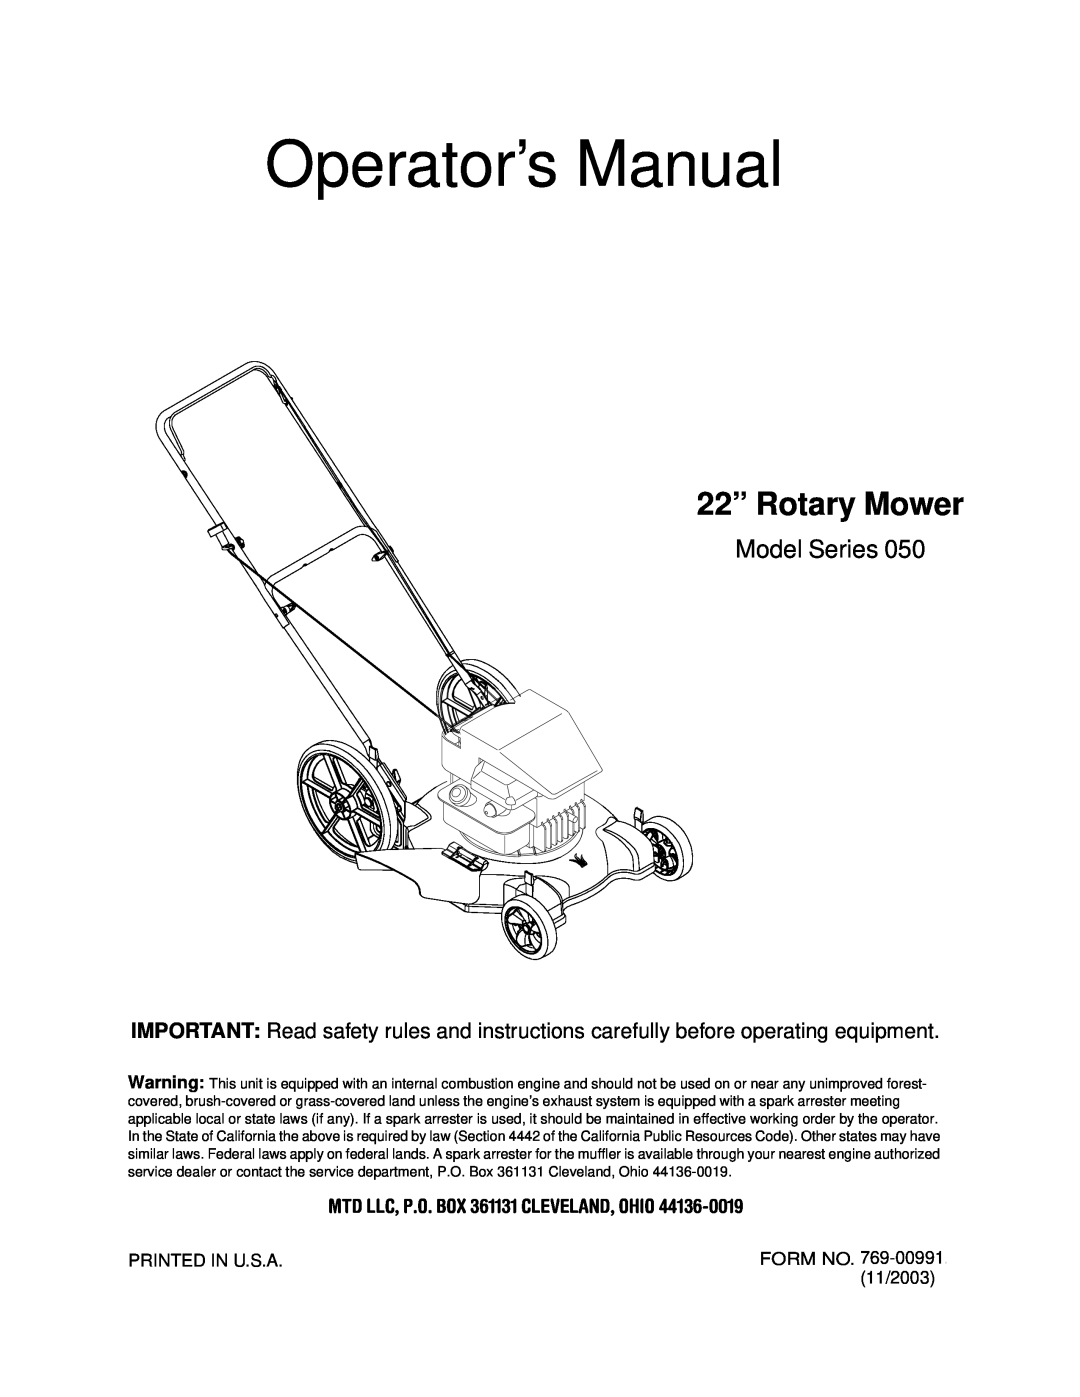 MTD 50 manual MTD LLC, P.O. BOX 361131 CLEVELAND, OHIO, Operator’s Manual, 22” Rotary Mower, Model Series 